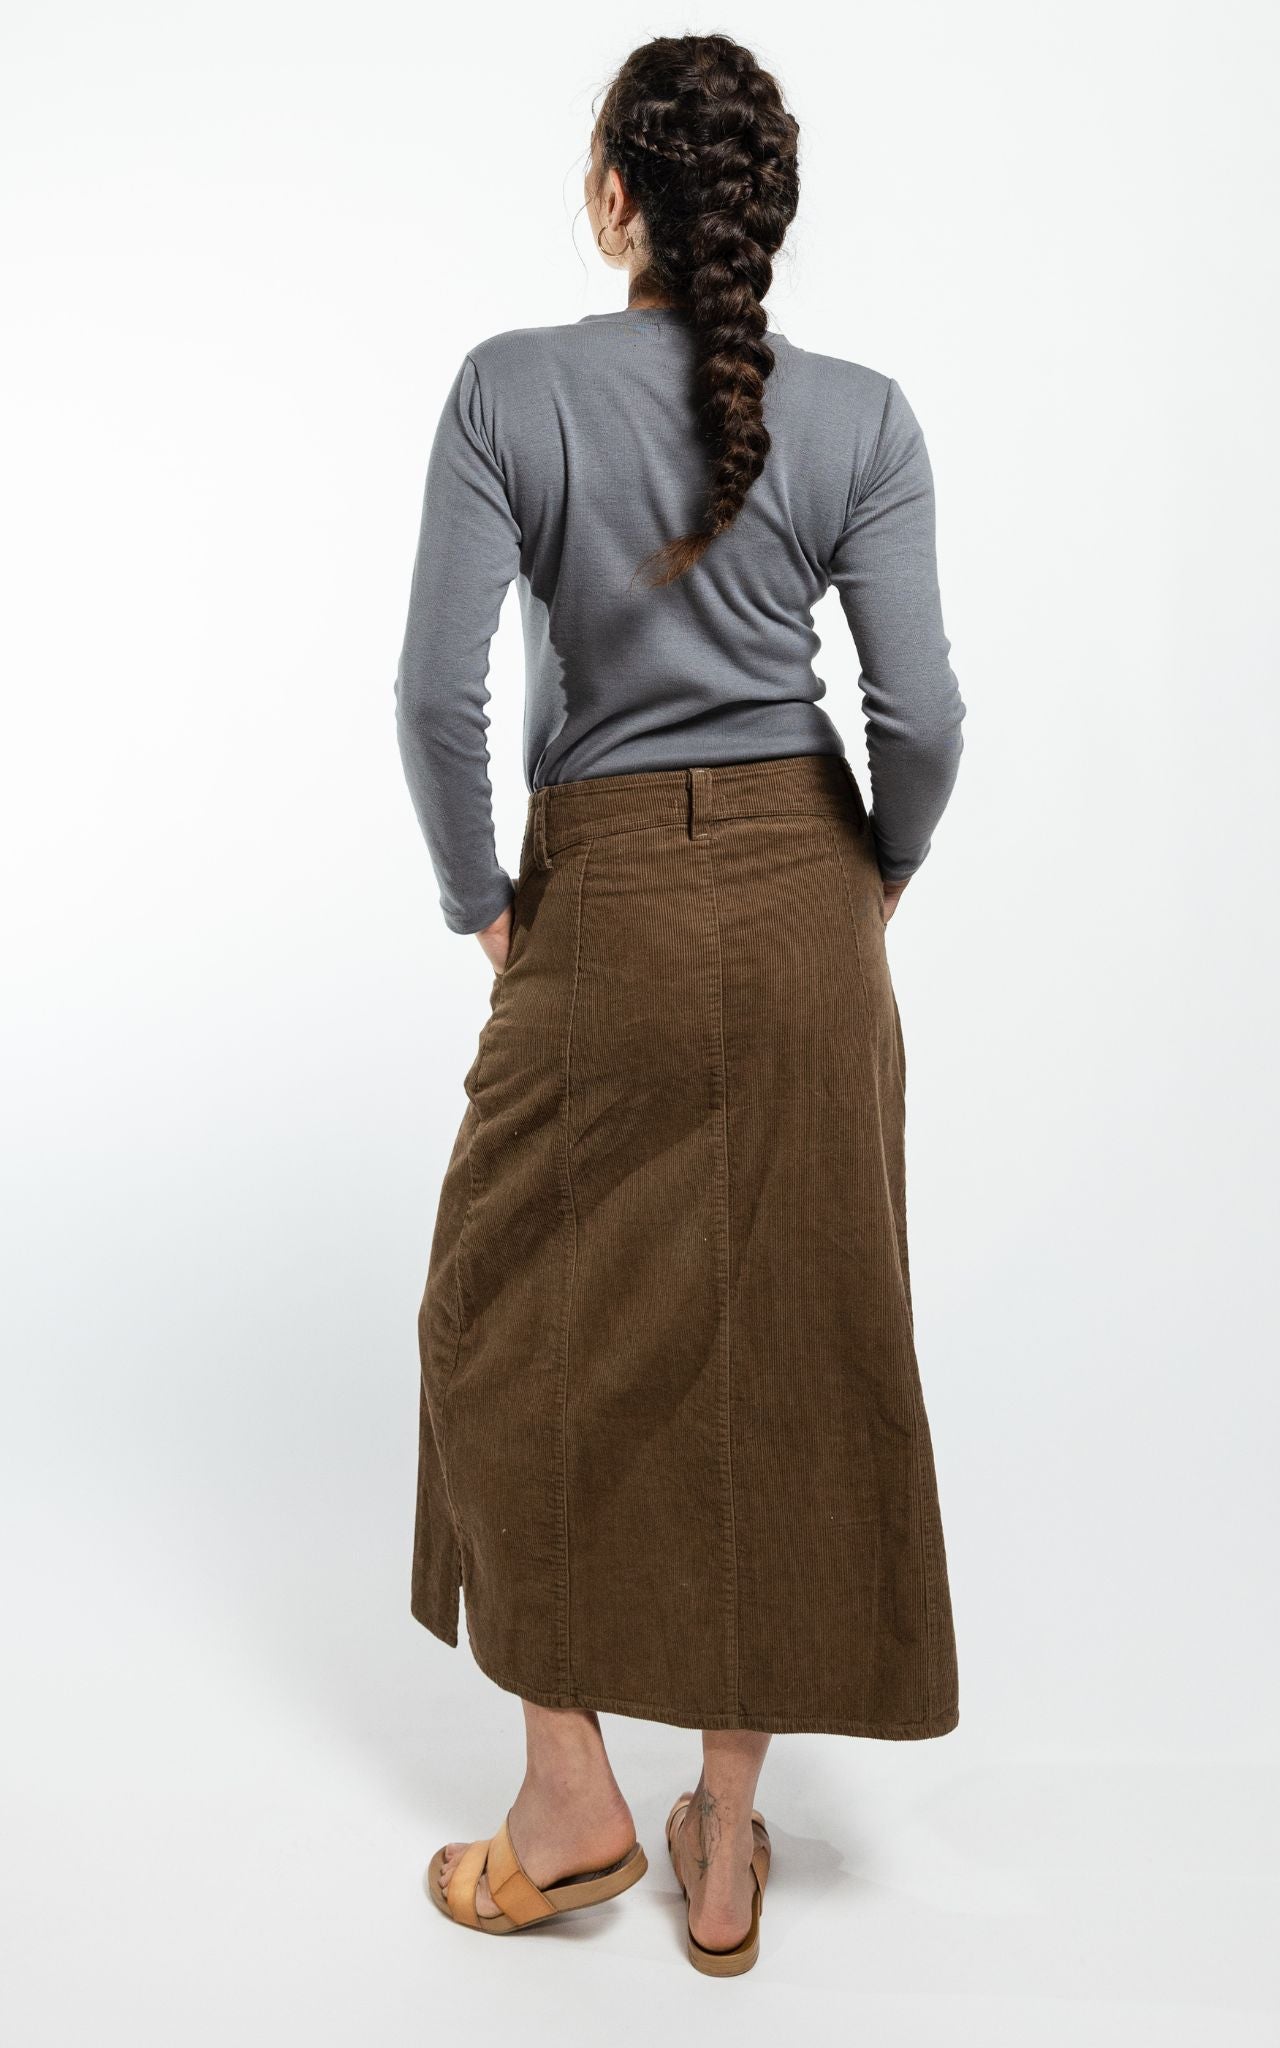 Surya Australia Corduroy Skirt made in Nepal - Peanut